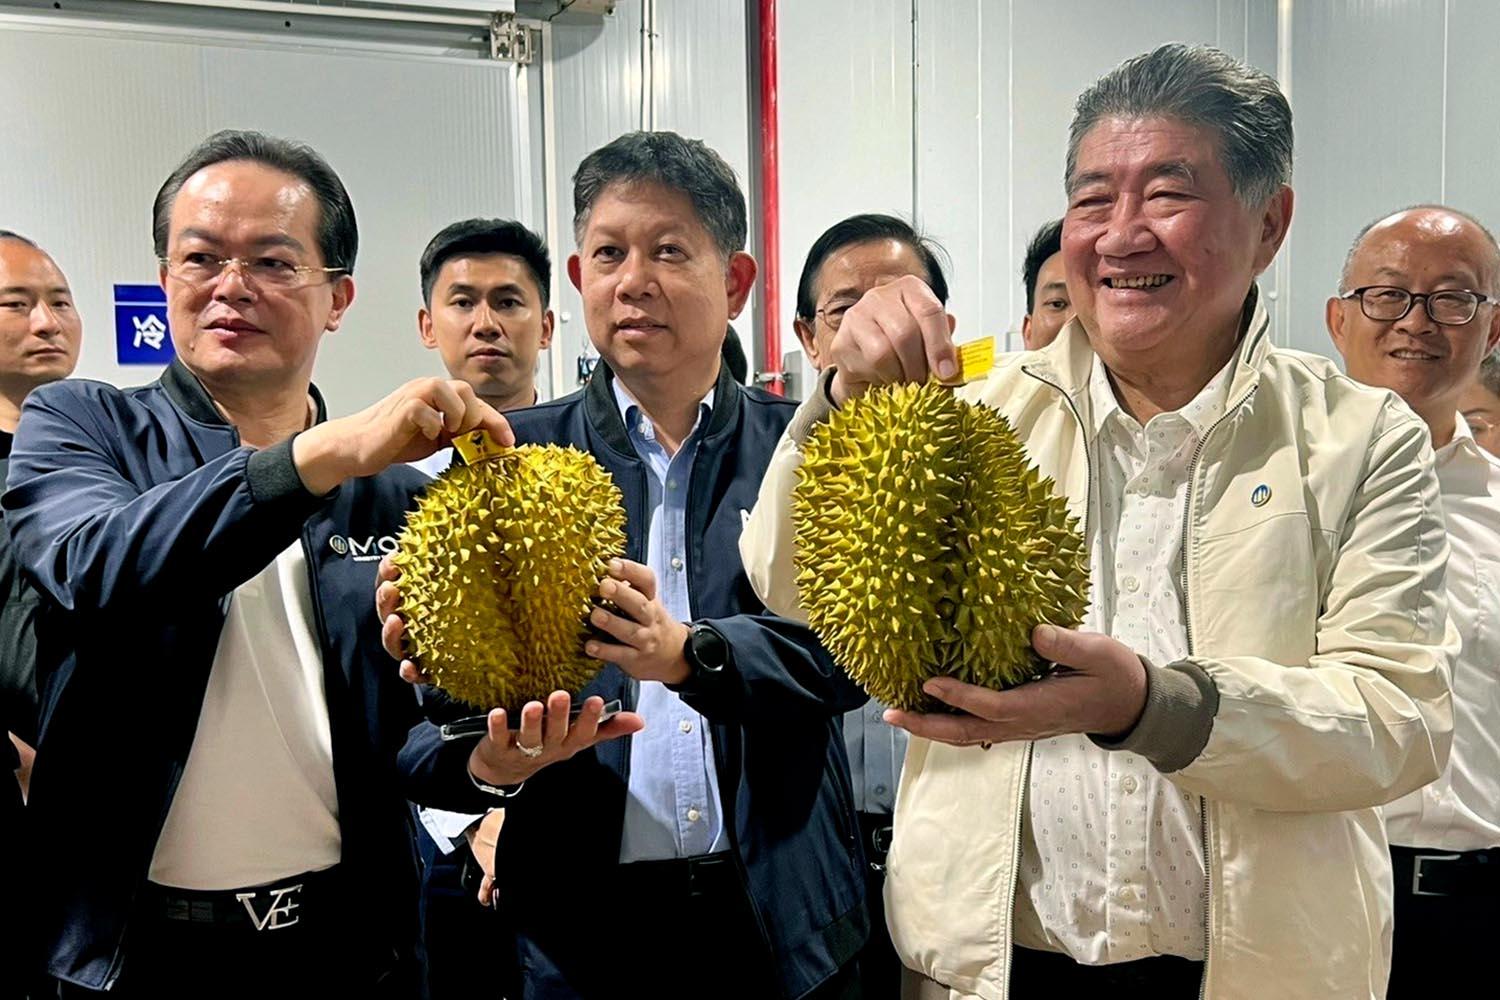 moc-thai-durian-mangosteen-mohan-boten-checkpoint-9-pm-SPACEBAR-Hero.jpg